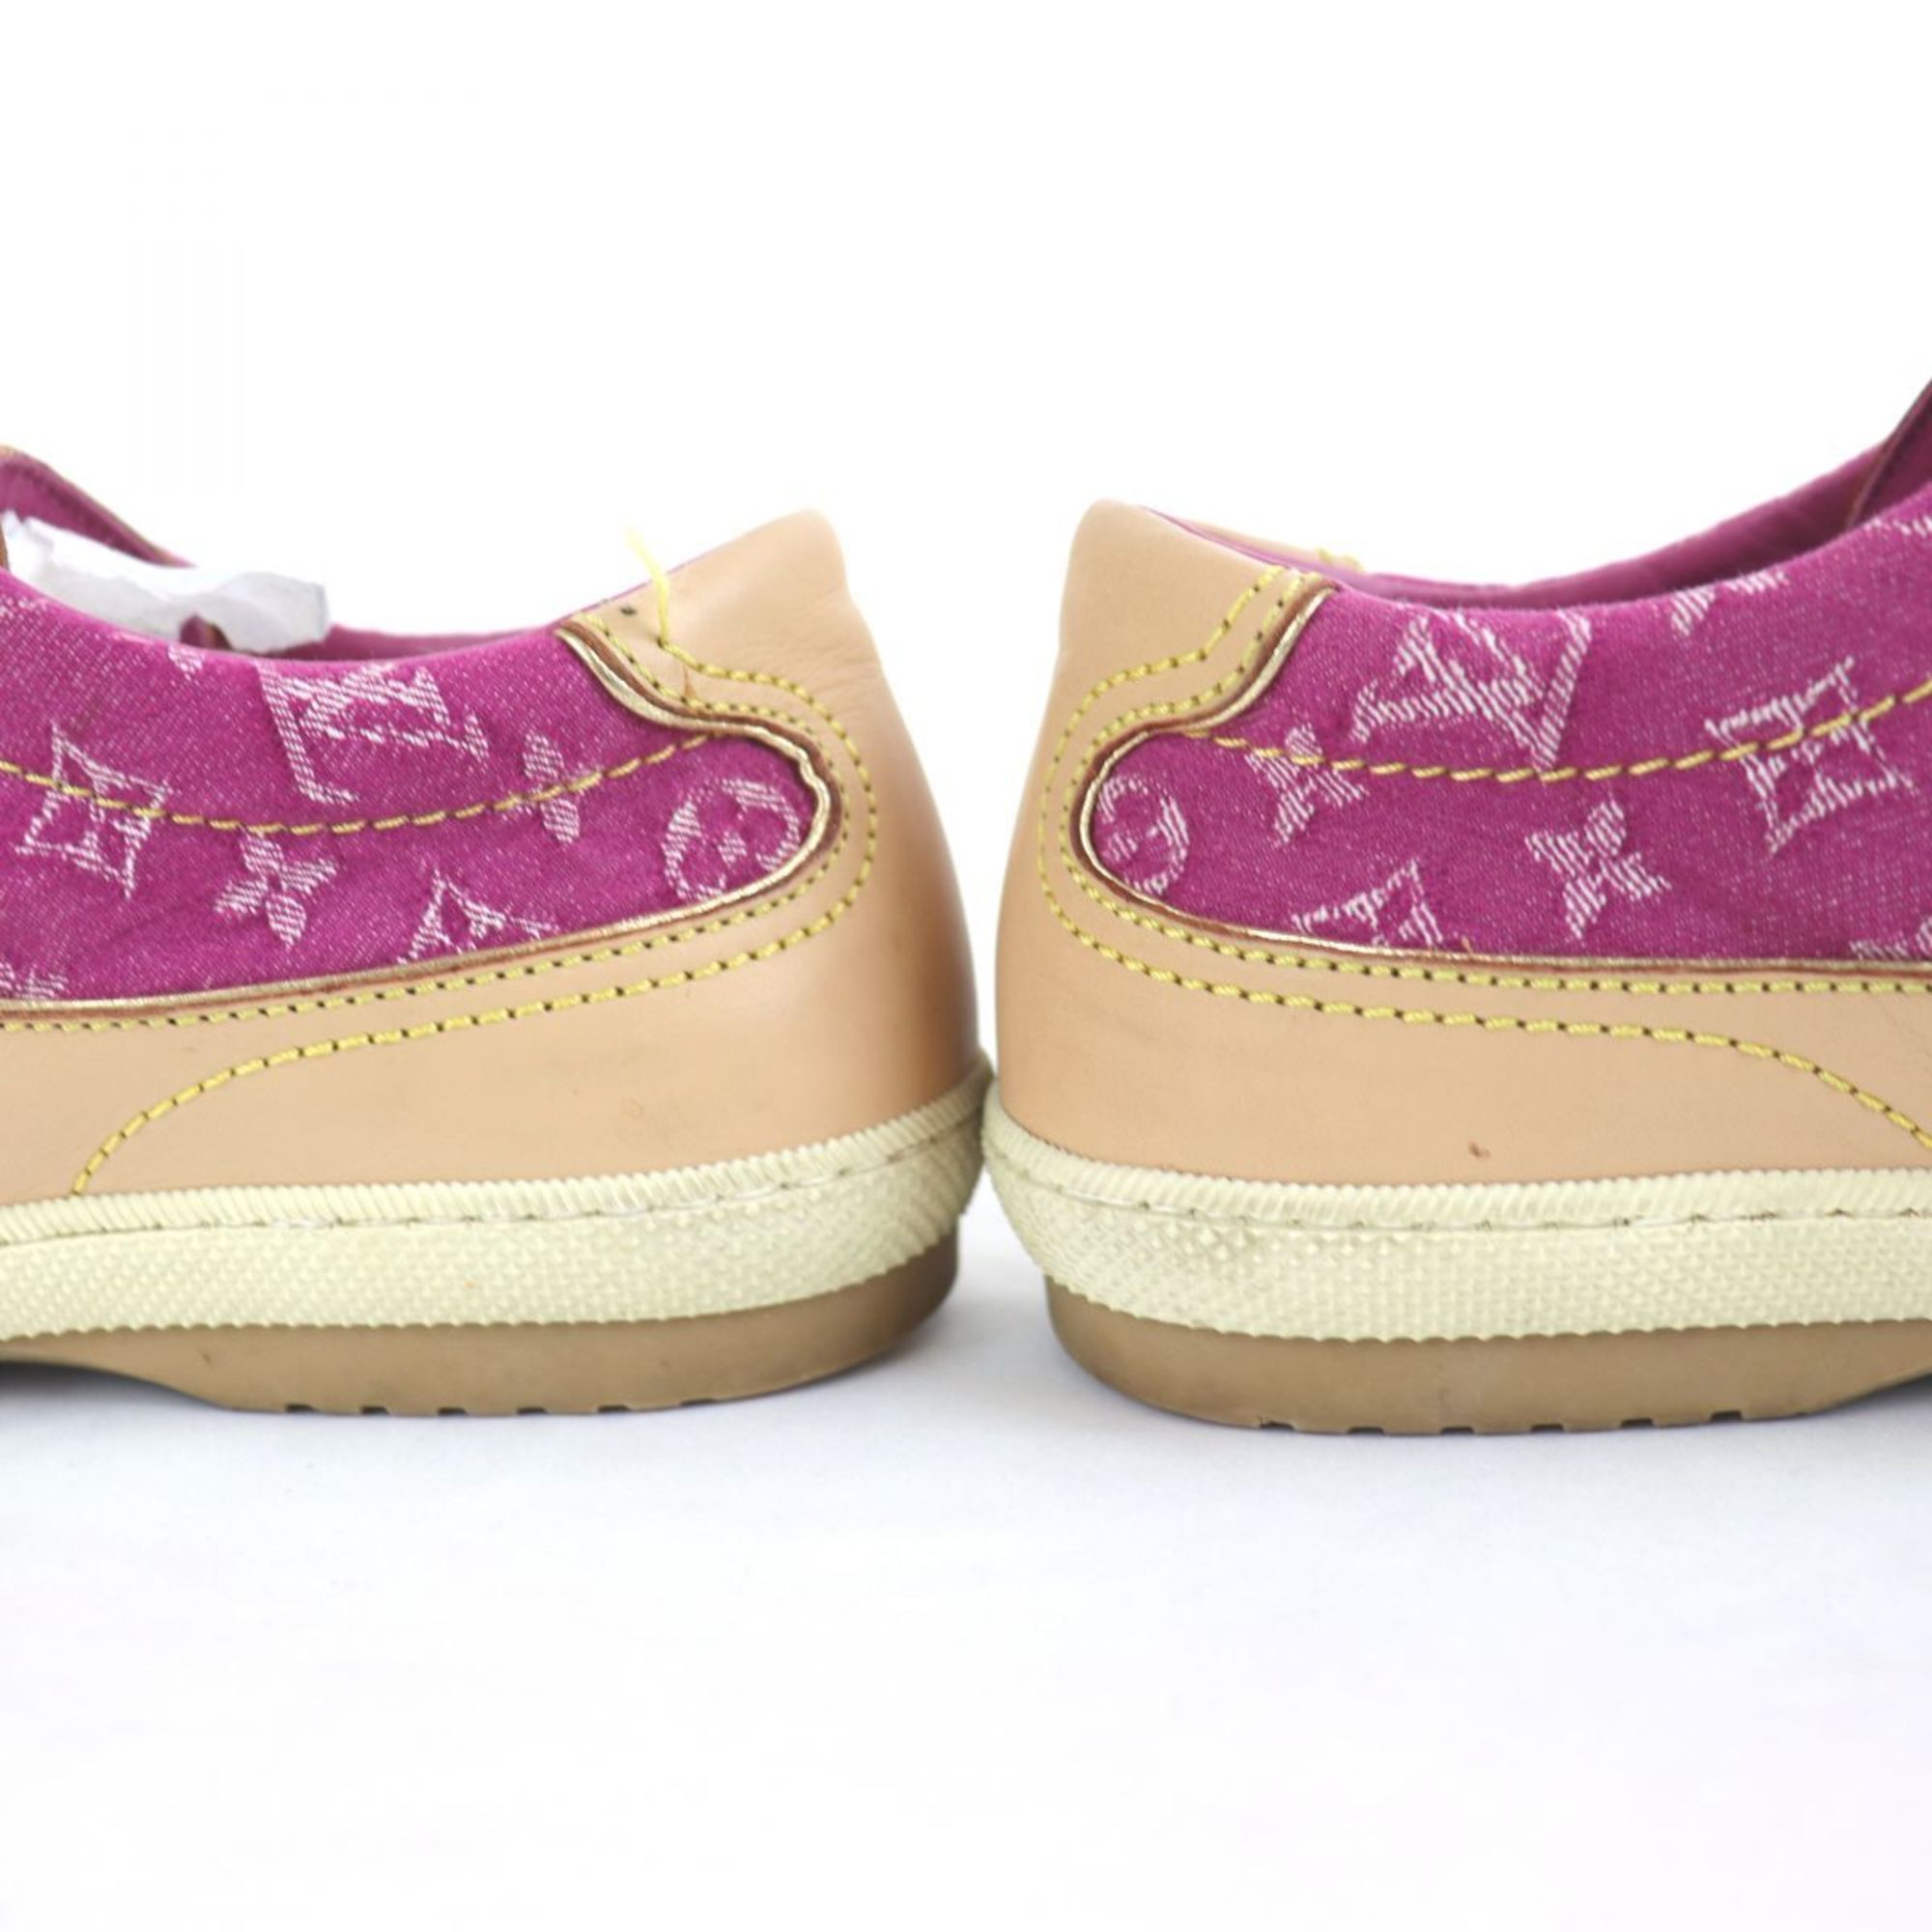 Louis Vuitton Monogram Denim Leather Sneakers Women's Pink Beige 36.5 Logo Low Cut